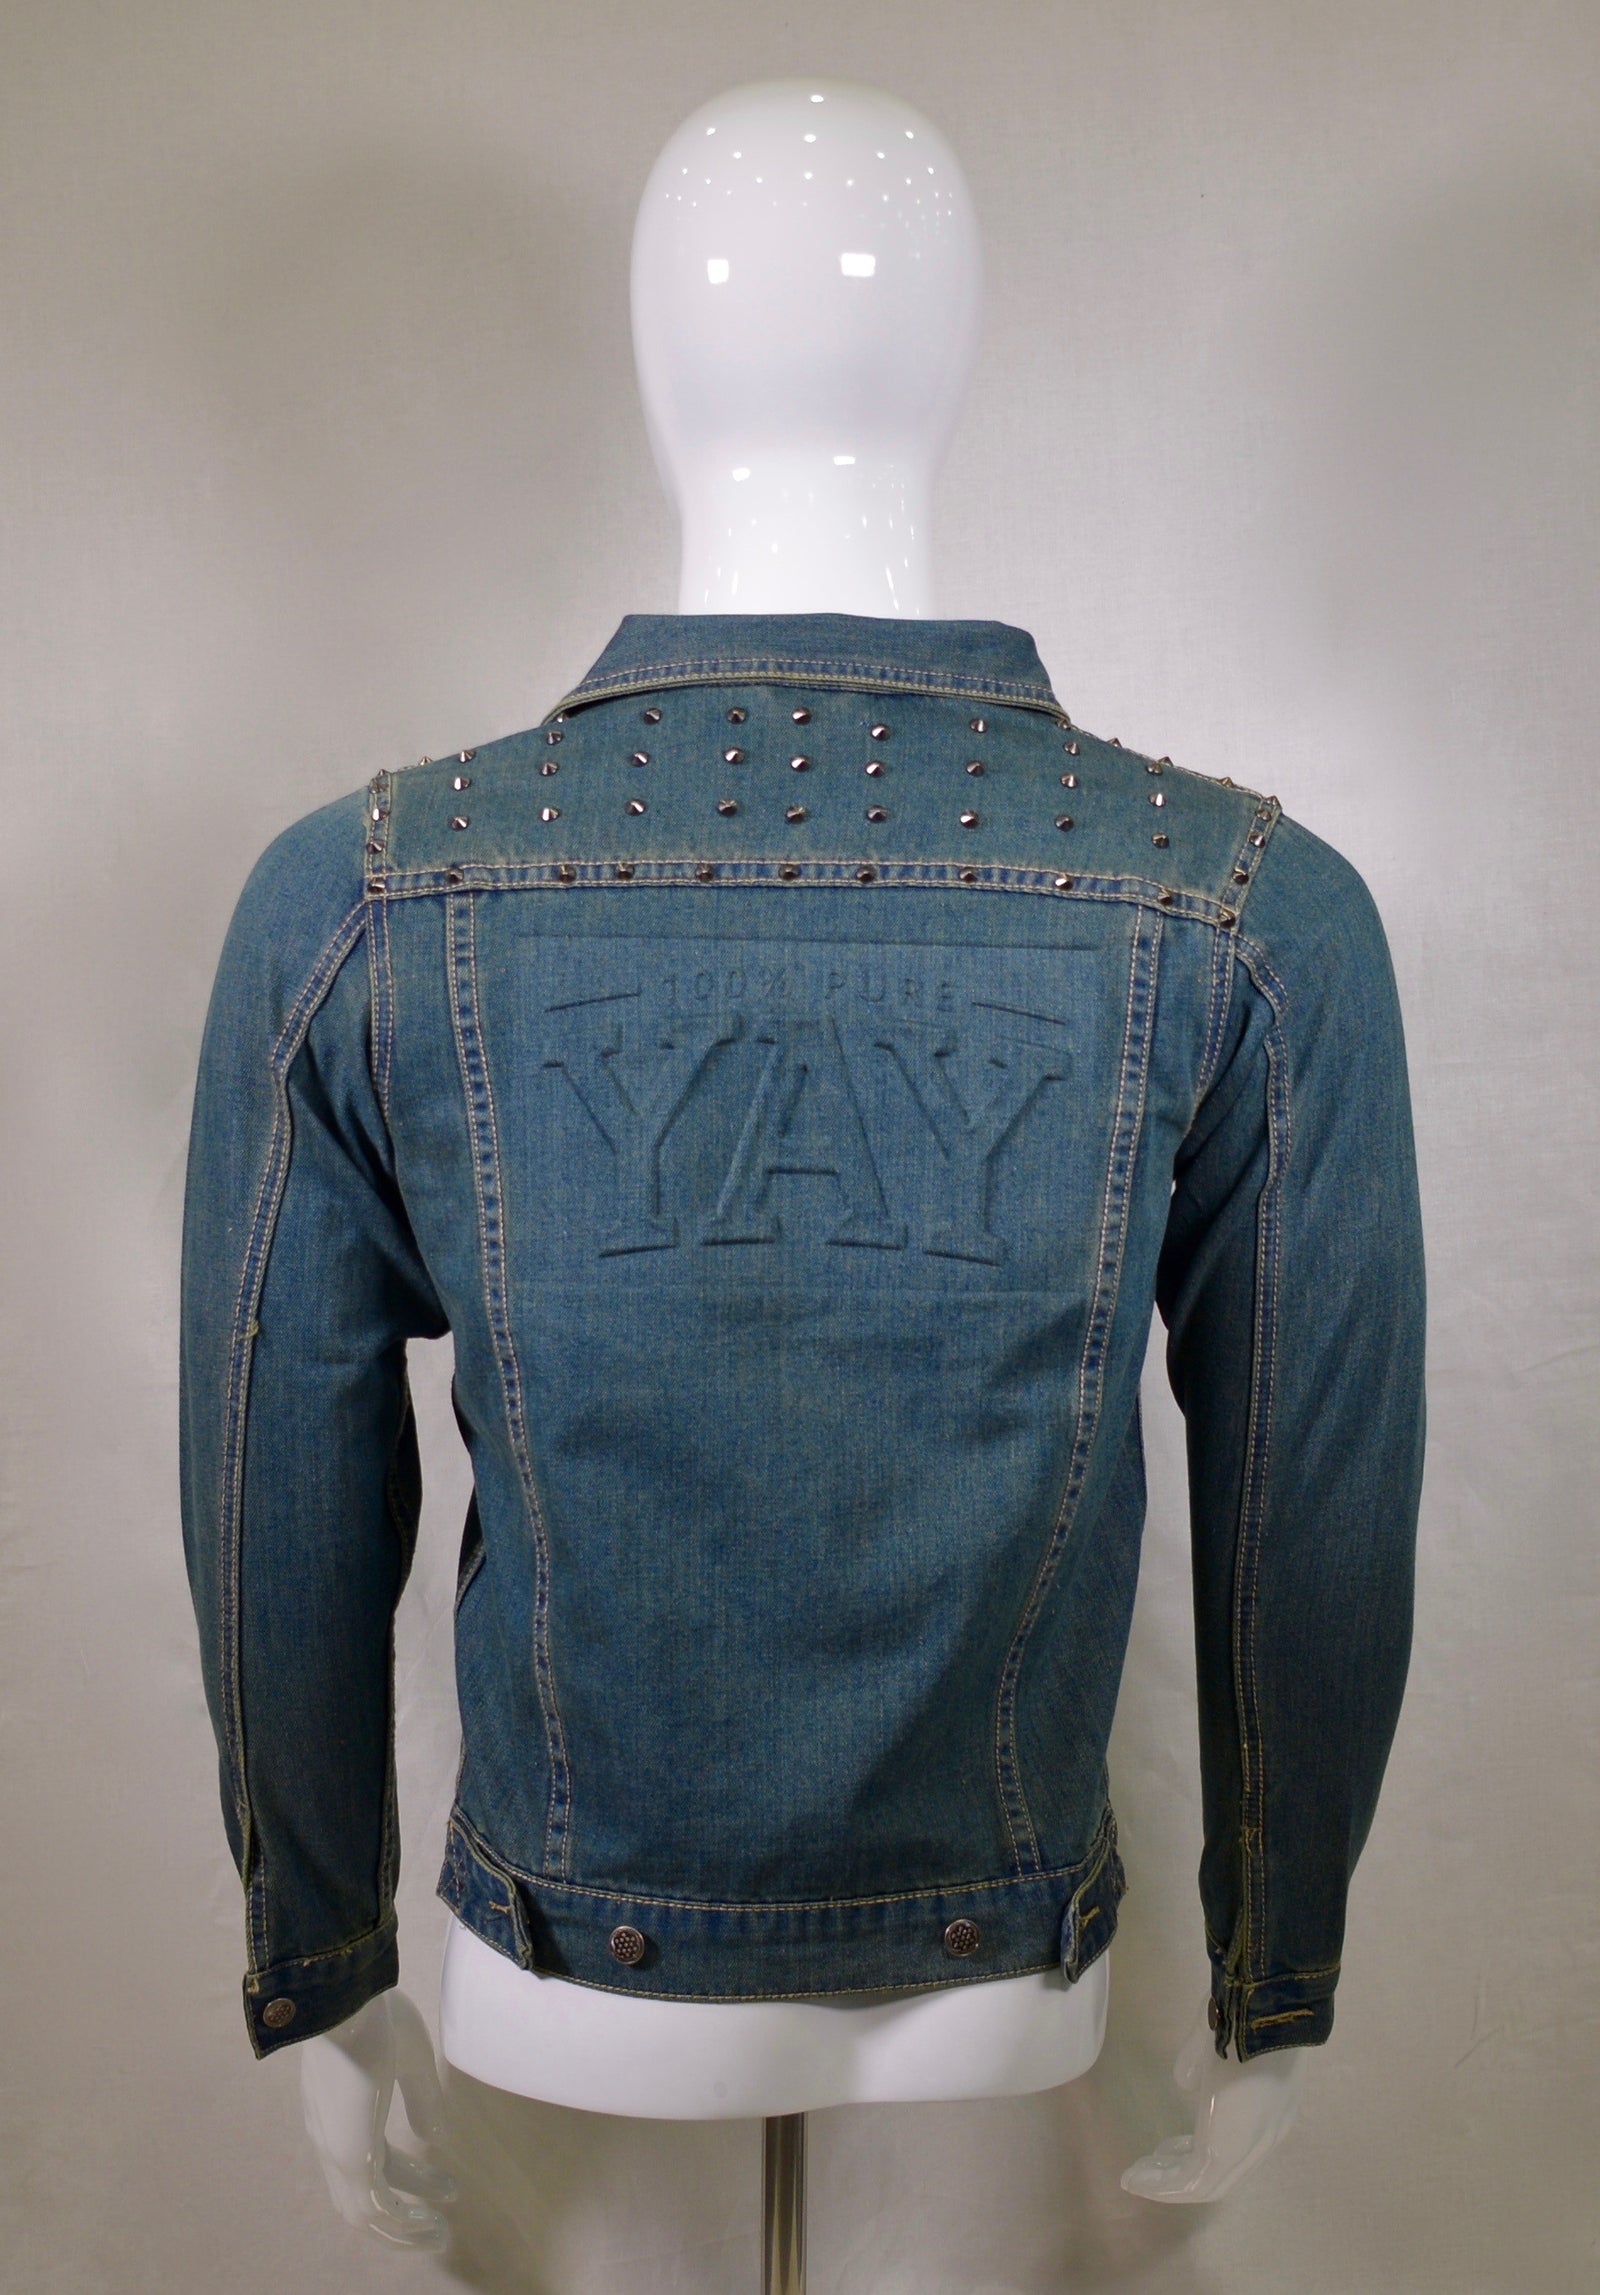 Chinx Yay Press Vintage Spiked Denim Jacket